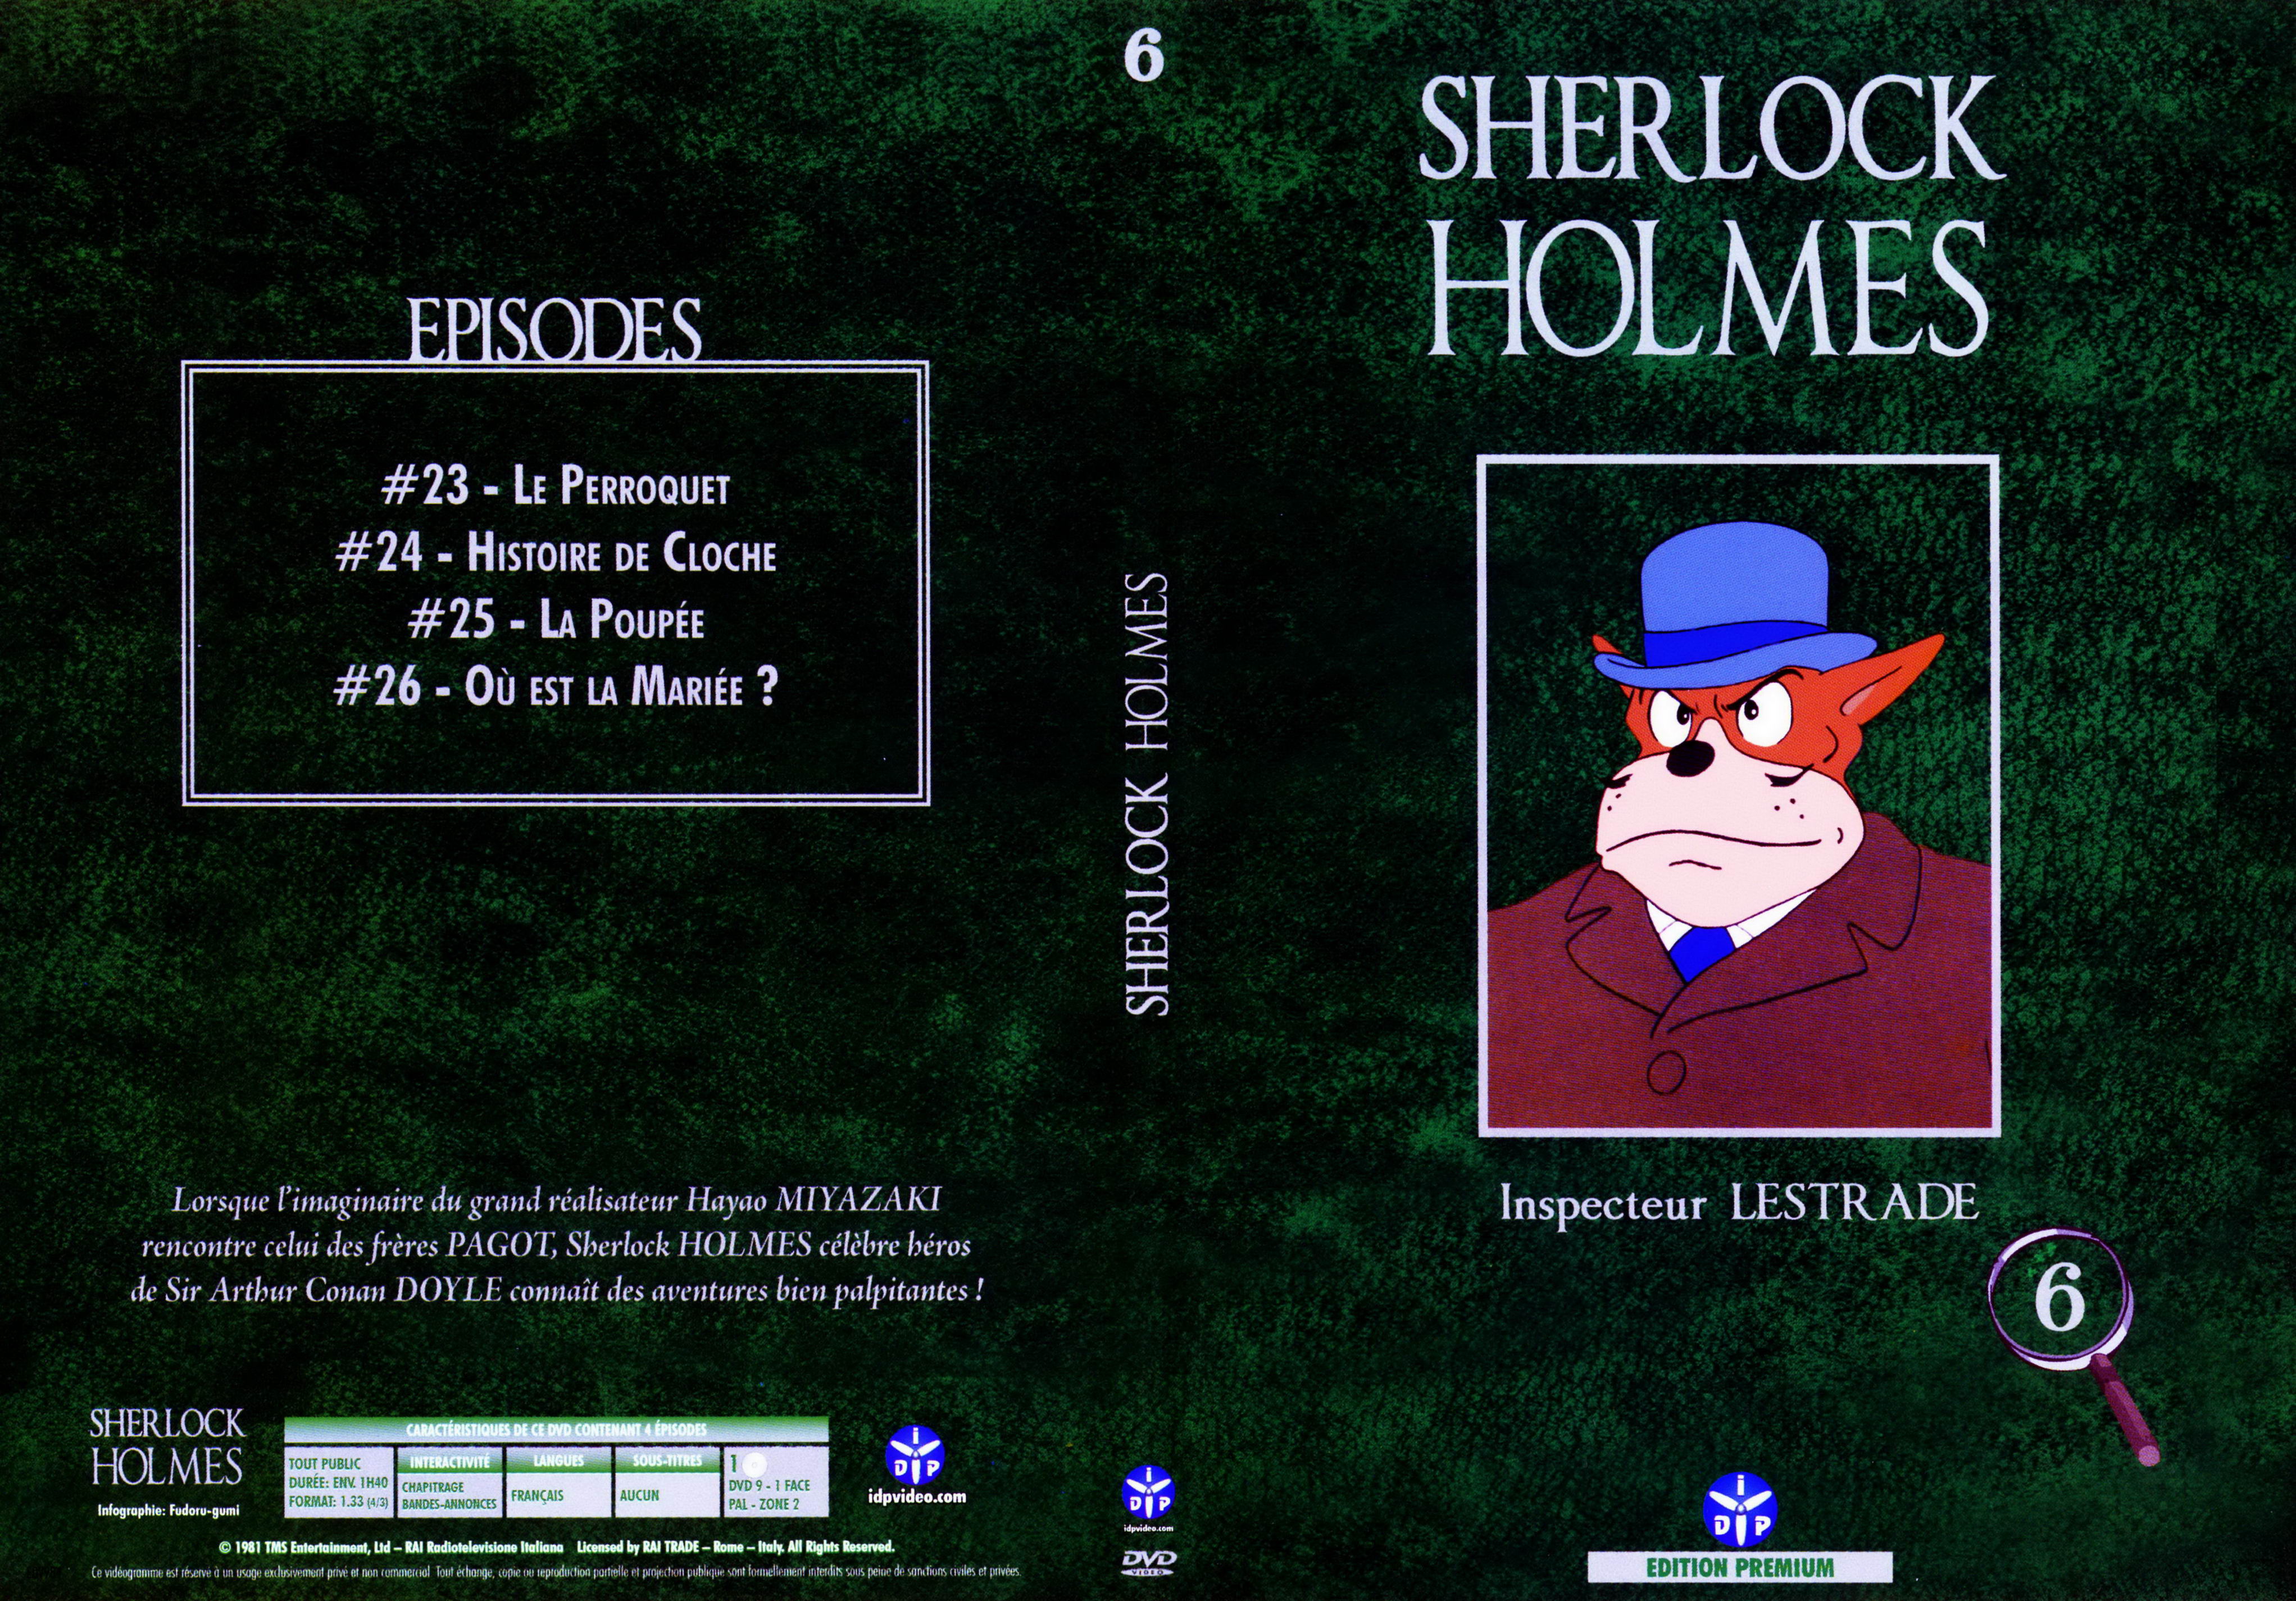 Jaquette DVD Sherlock Holmes vol 6 v2